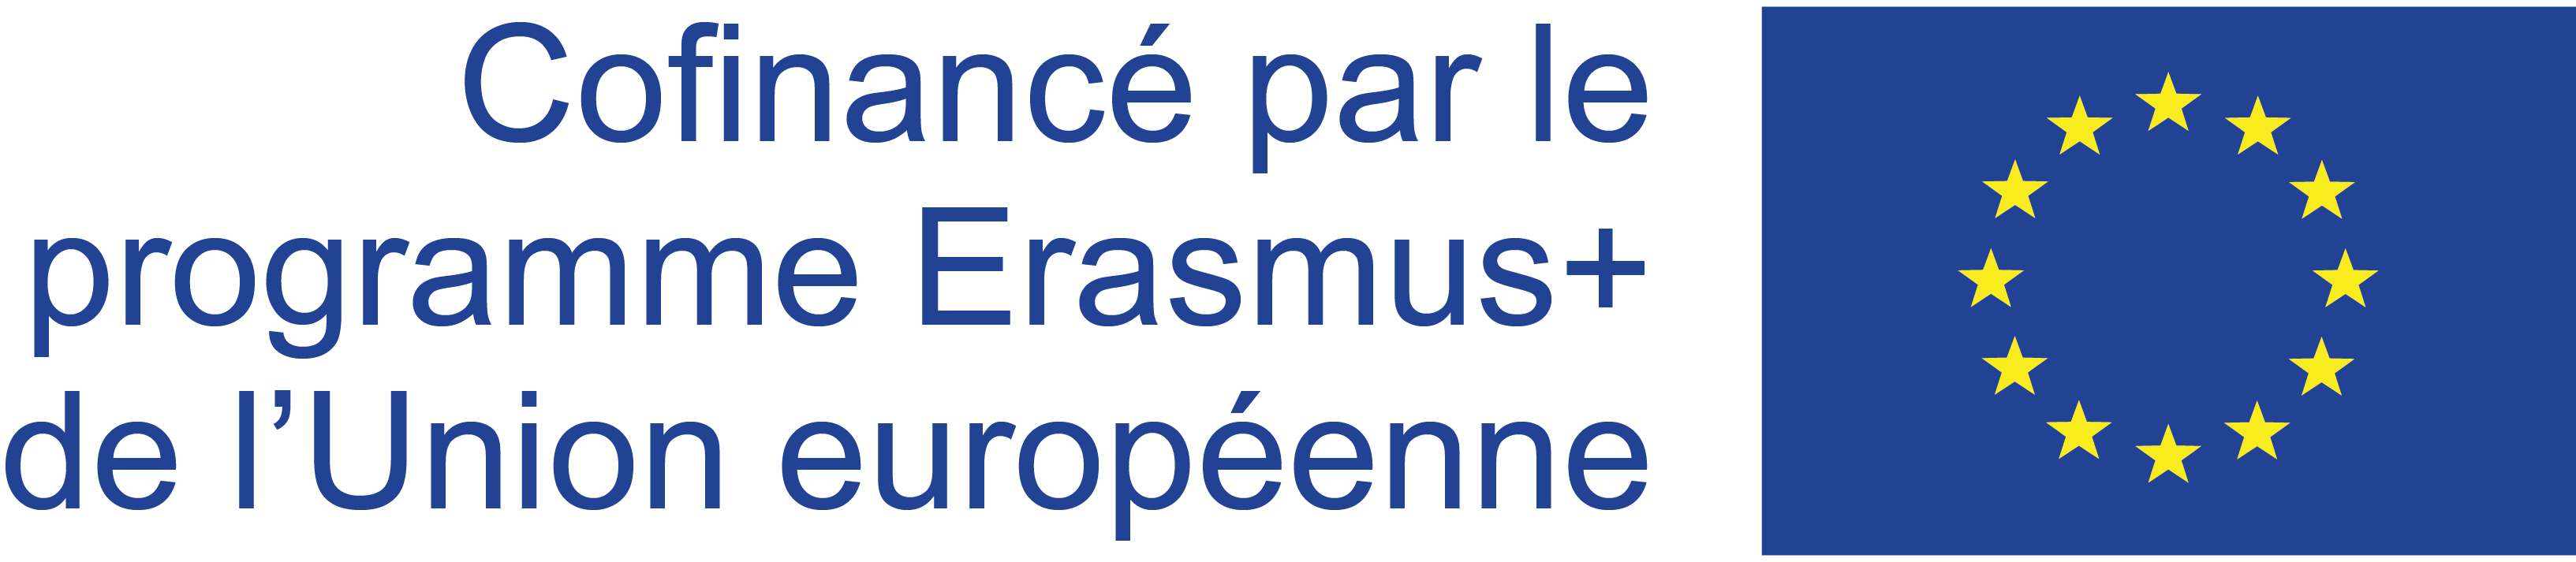 Co financé Erasmus FR